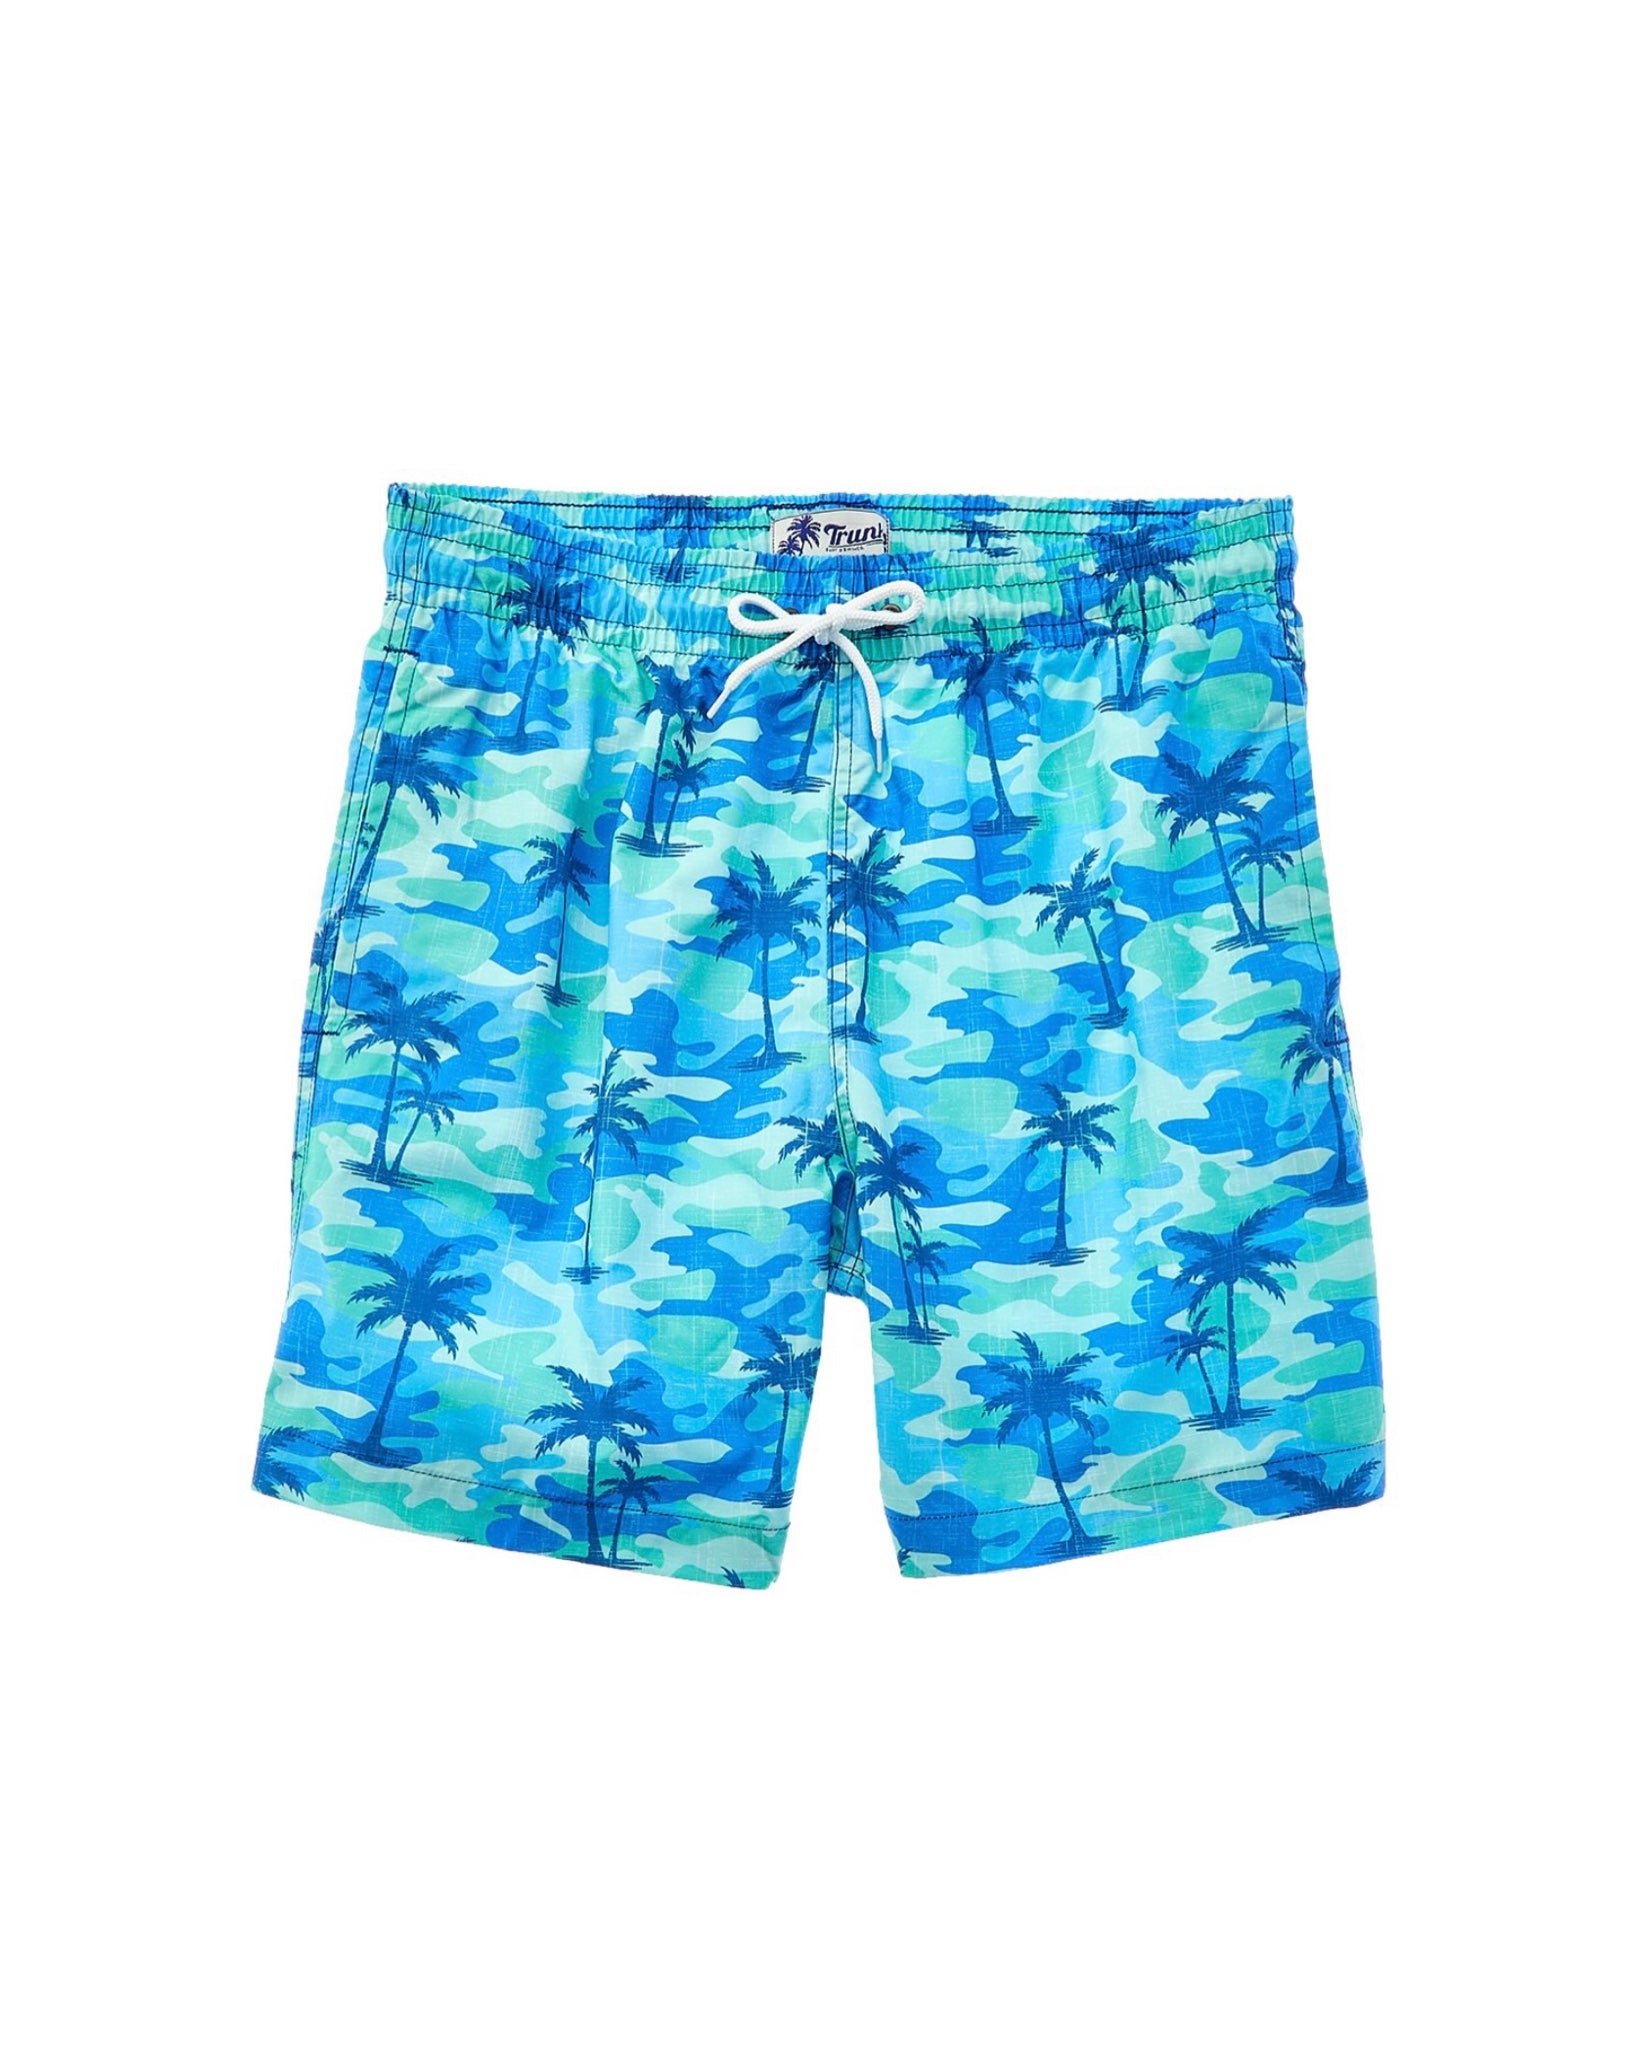 Trunks Surf & Swim Co. Camo Sano Swim Short in blue – Garmisland